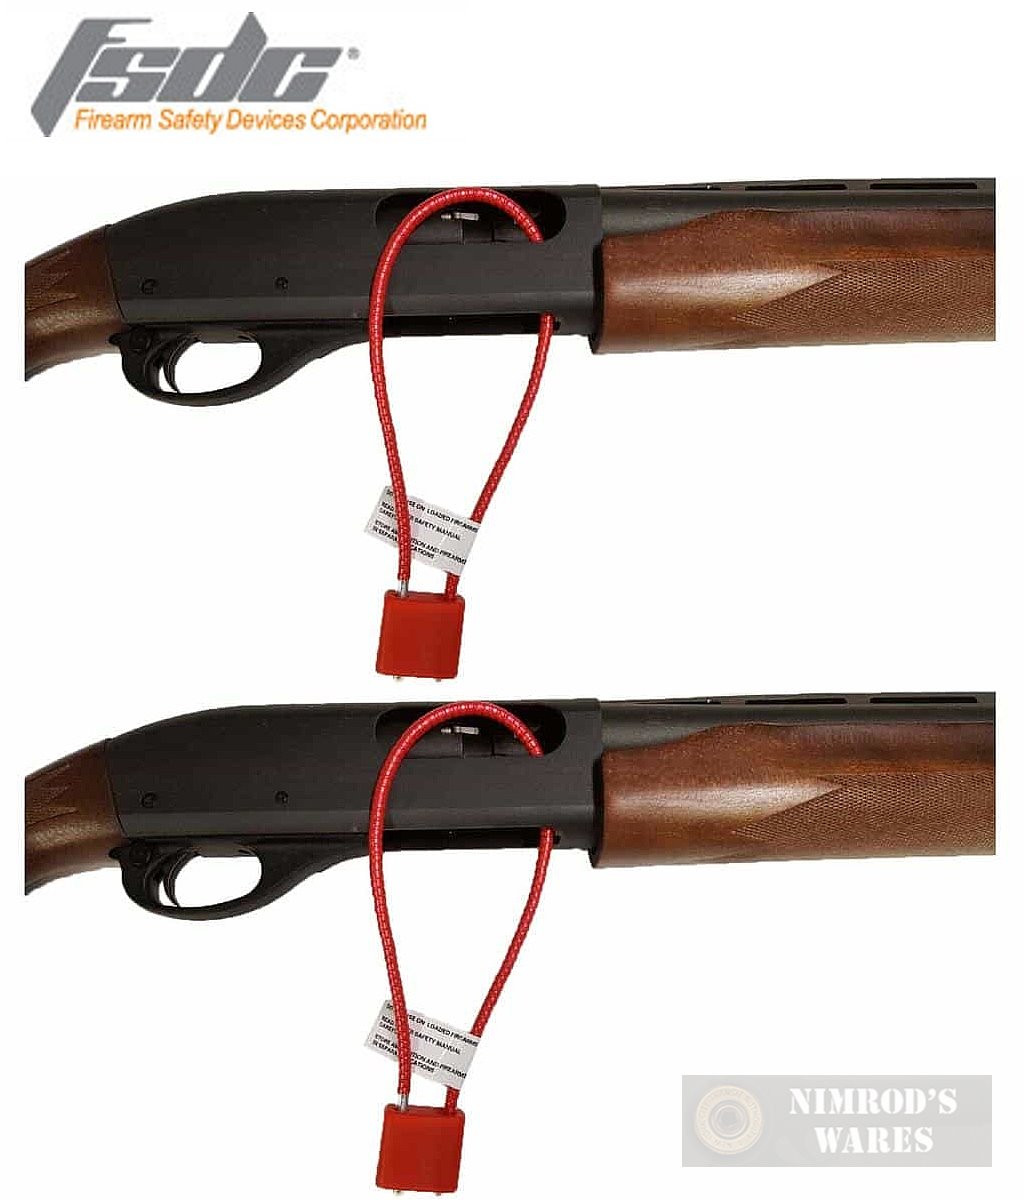 NEW UTG Firearm Rifle/Pistol/Revolver Cable Lock 5.3mm/15" CA DOJ Approved 